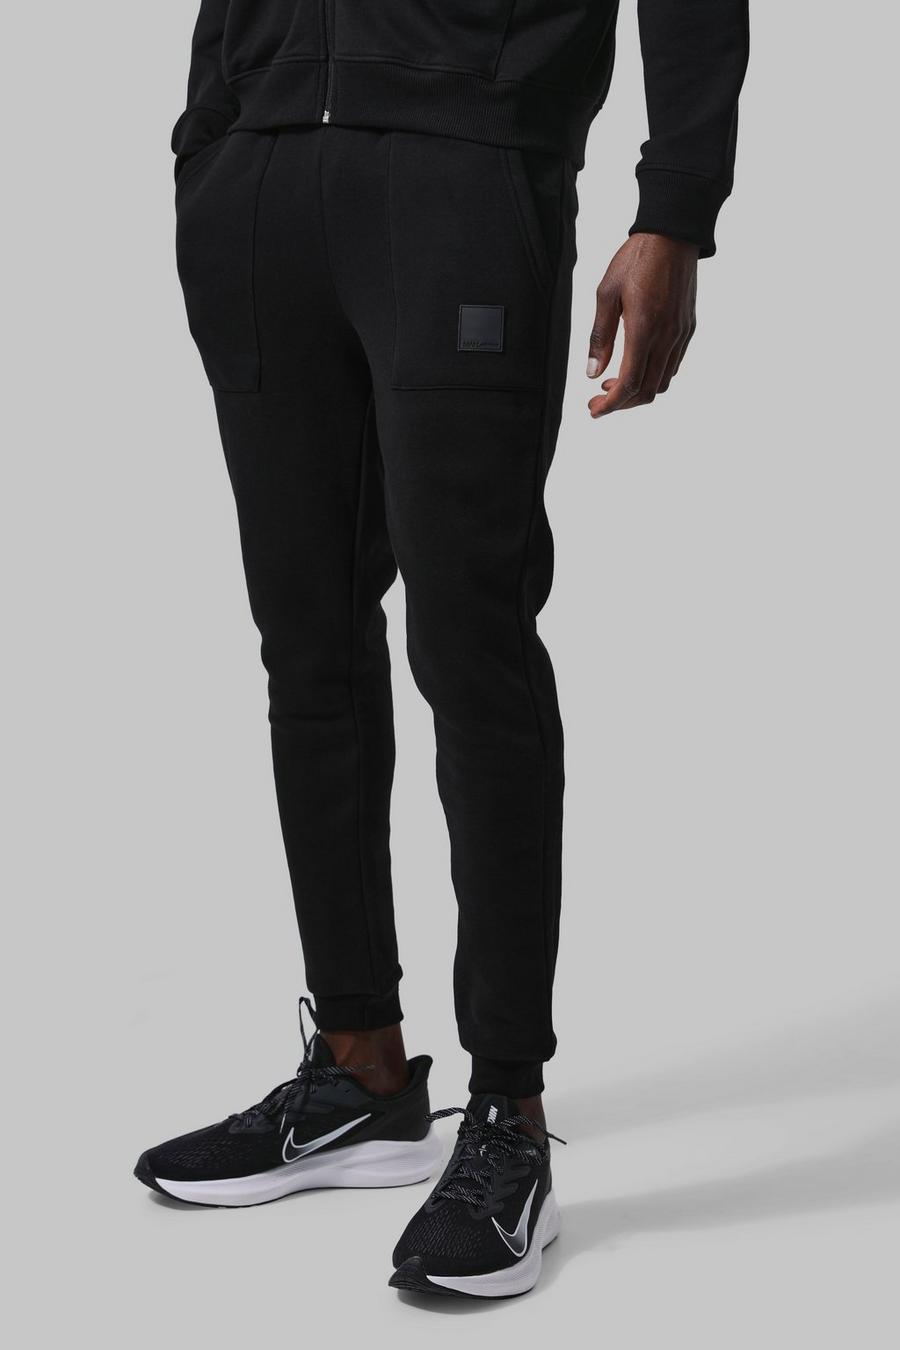 Pantaloni tuta Man Active Gym con tasche, Black negro